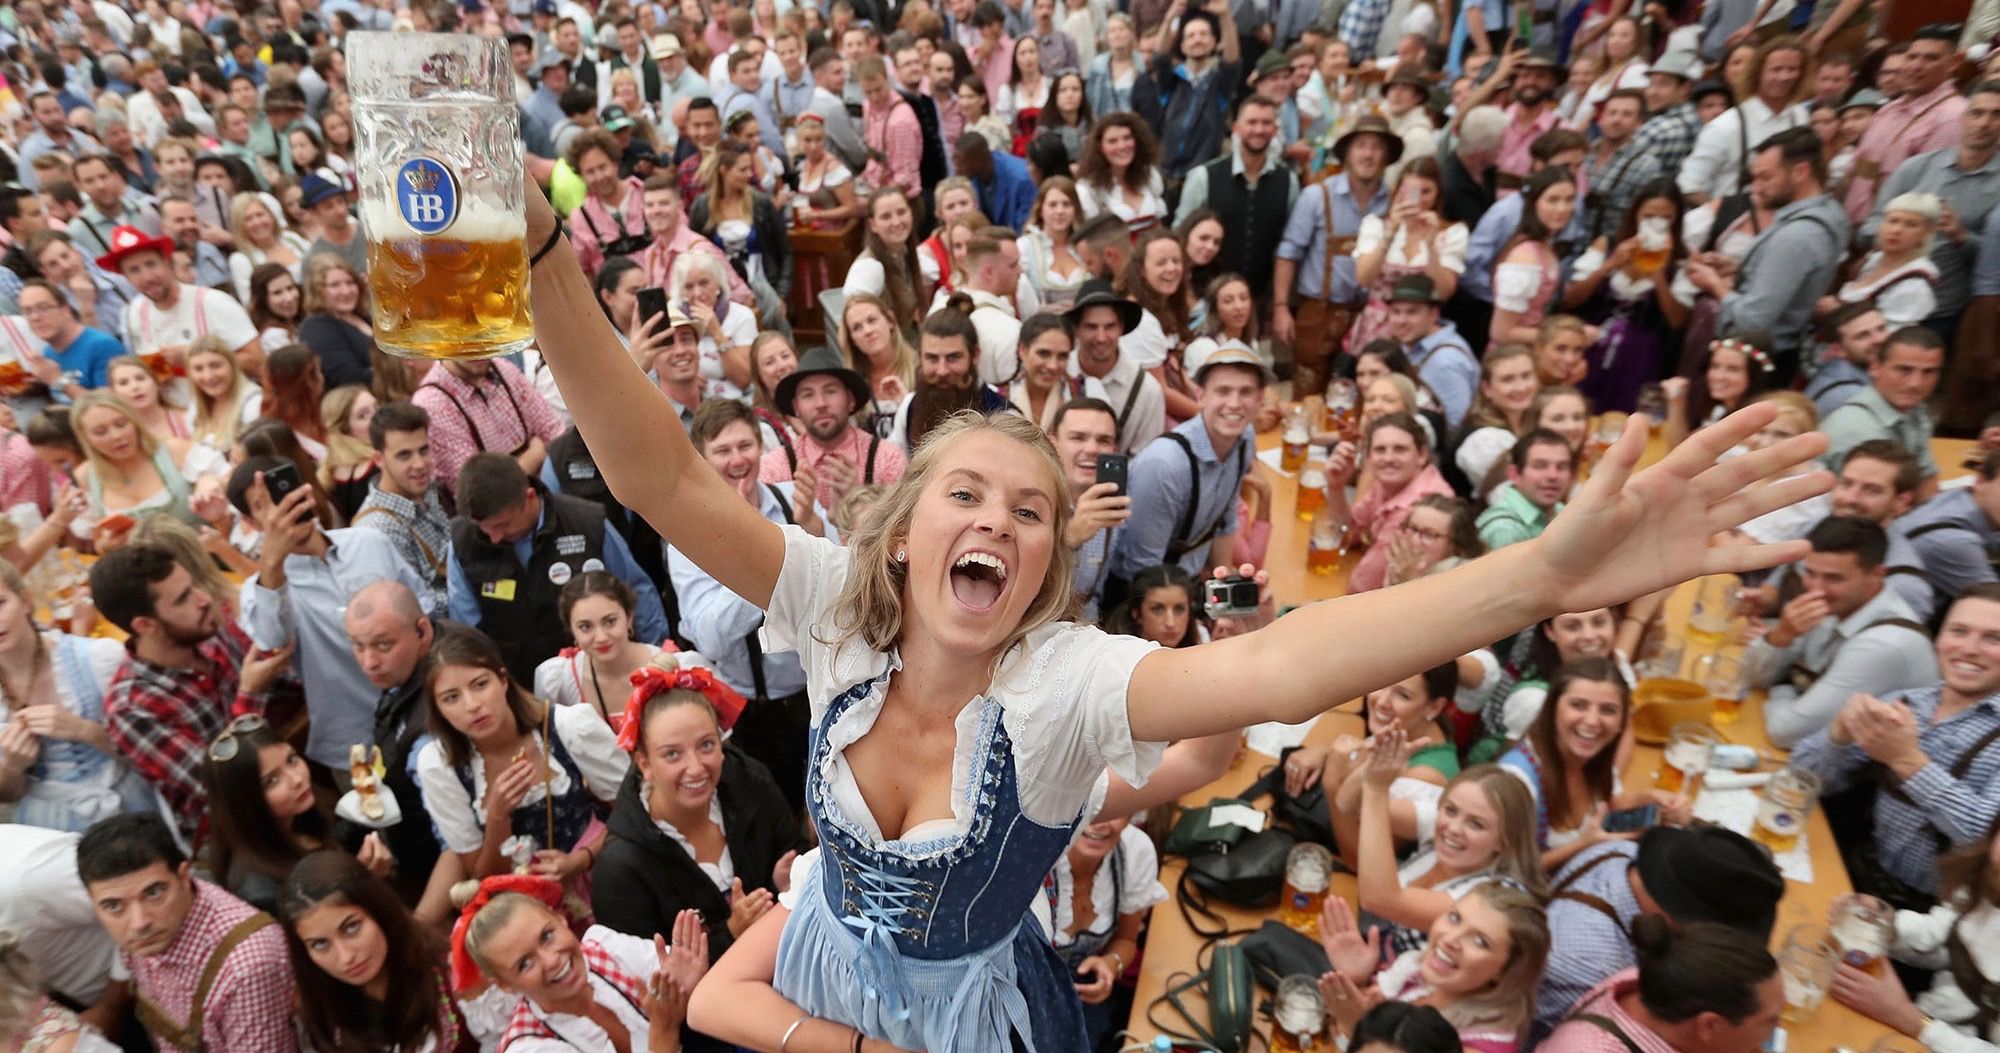 Munique recebera seis milhoes de visitantes para a Oktoberfest 2019